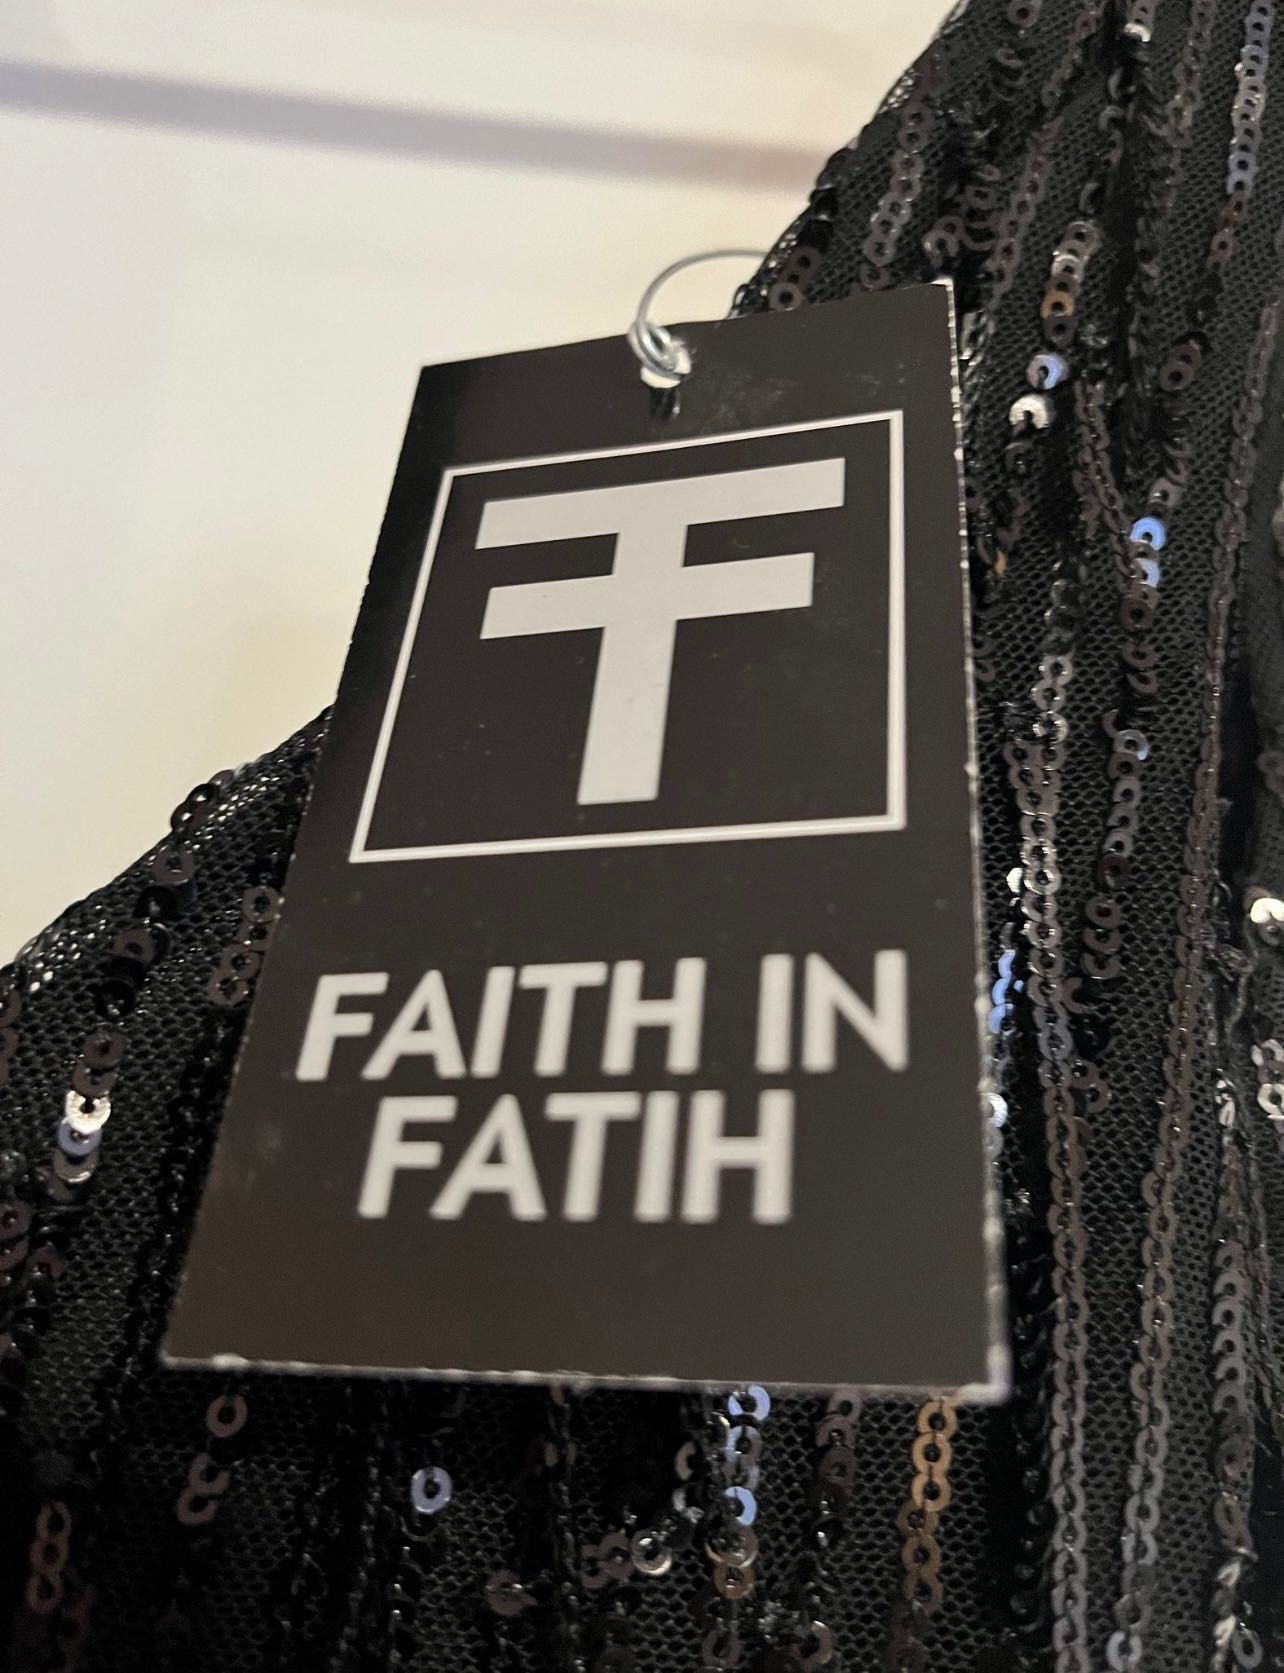 Рокля на “Faith in Fatih”